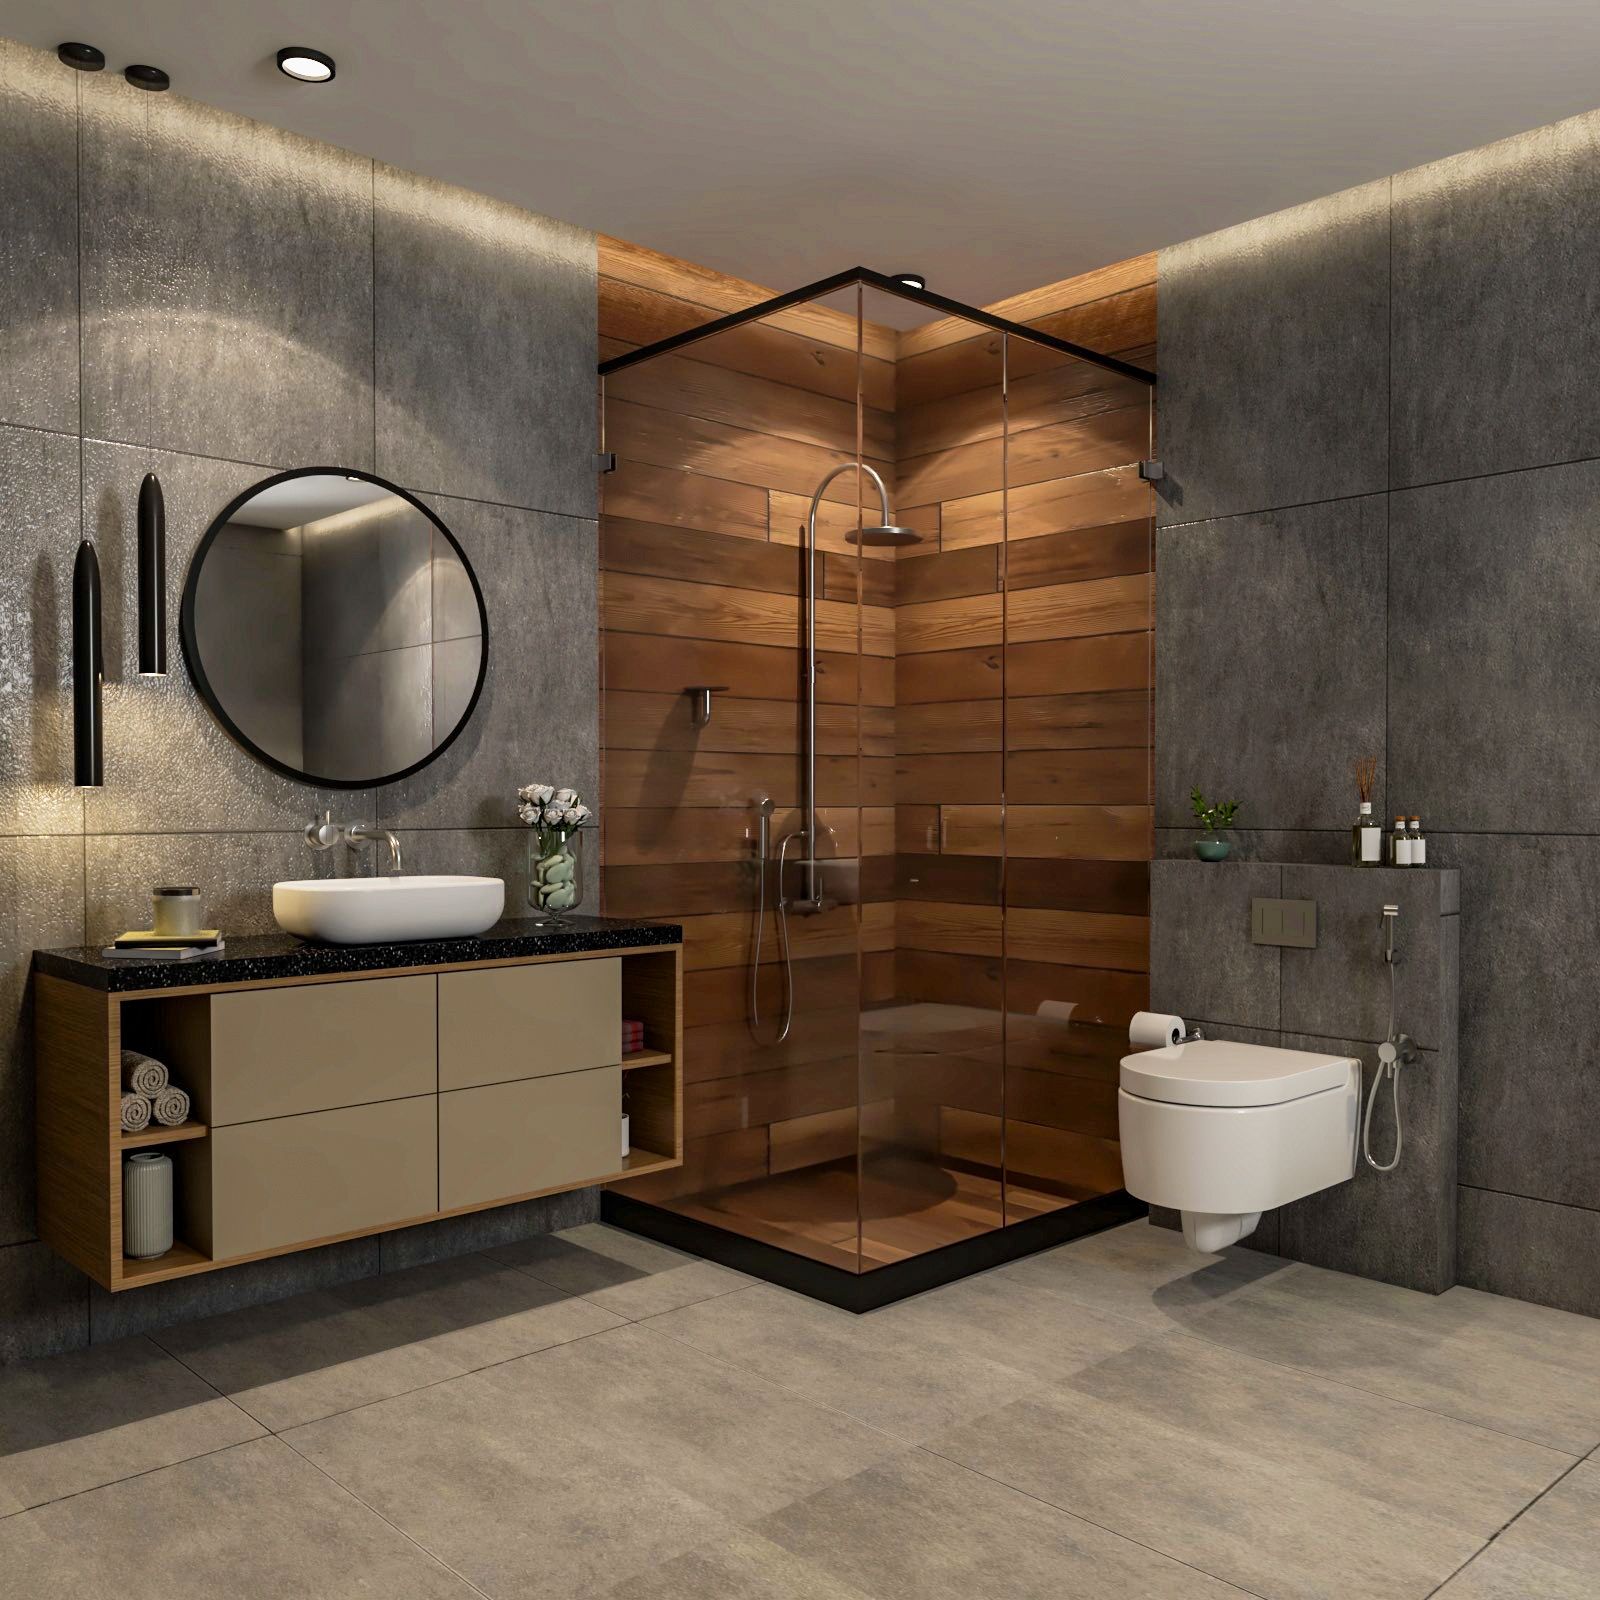 Rustic Bathroom Design With A Granite Countertop